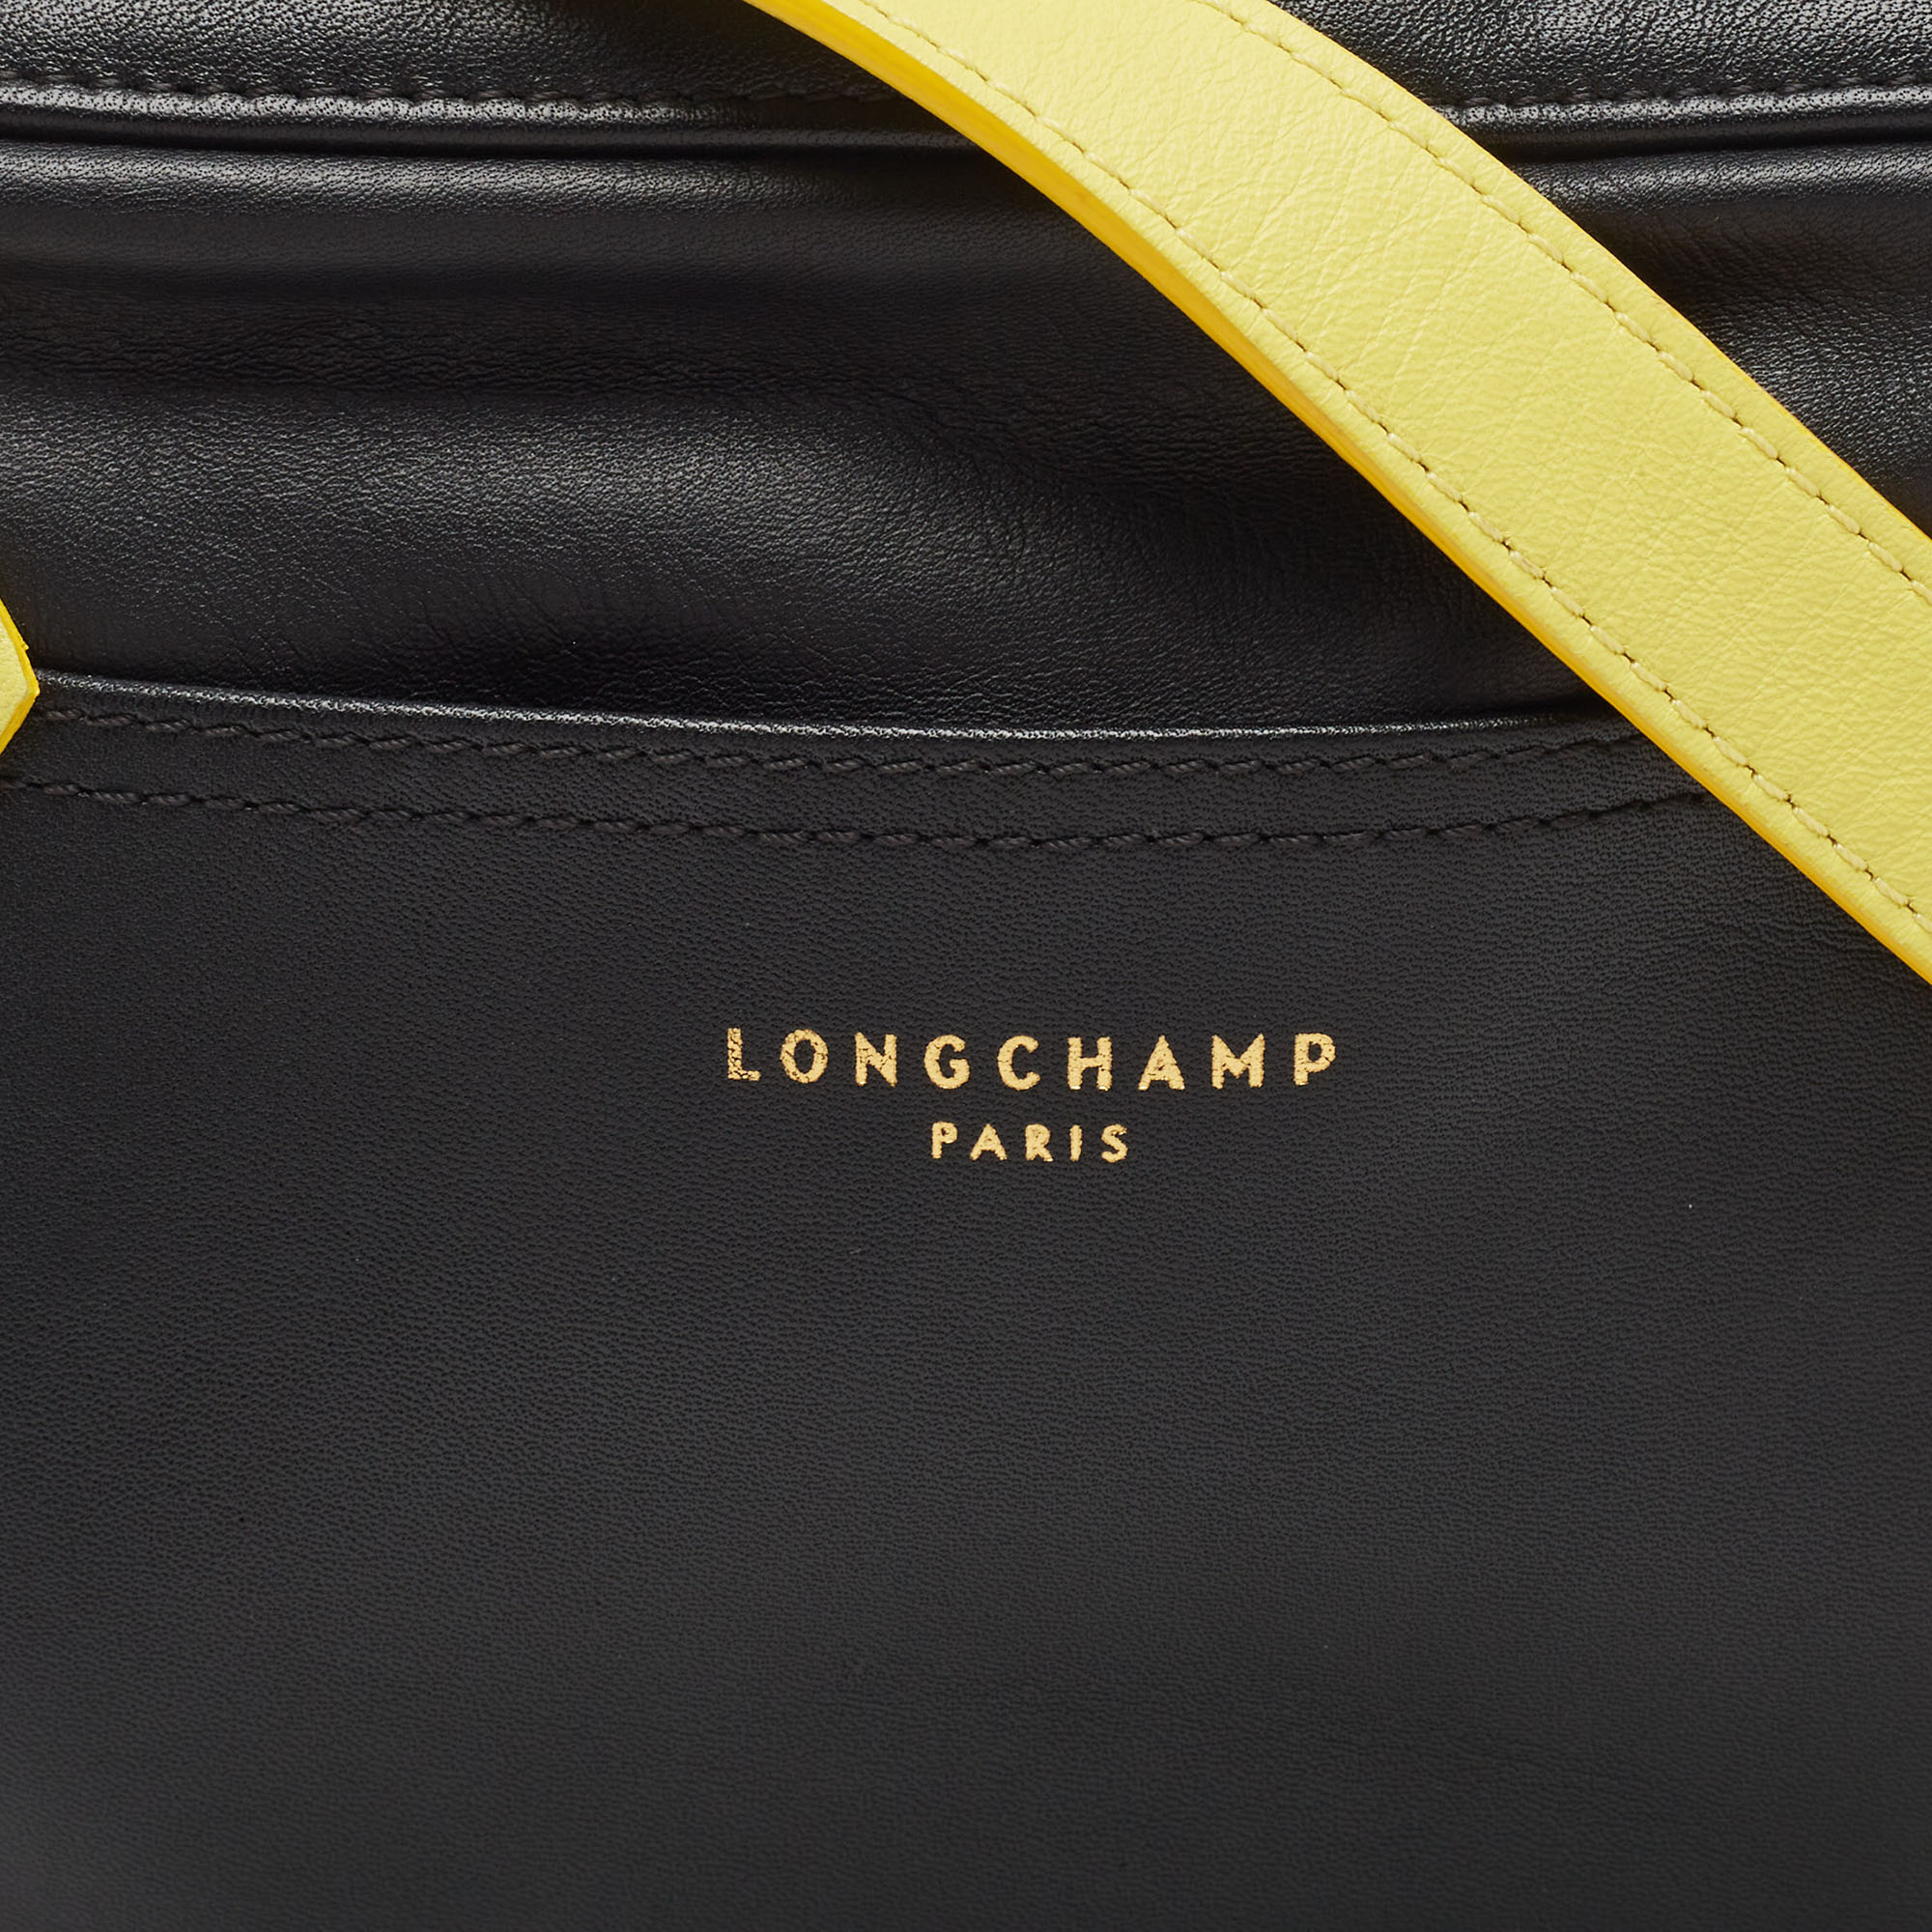 Longchamp Black Leather Crossbody Bag